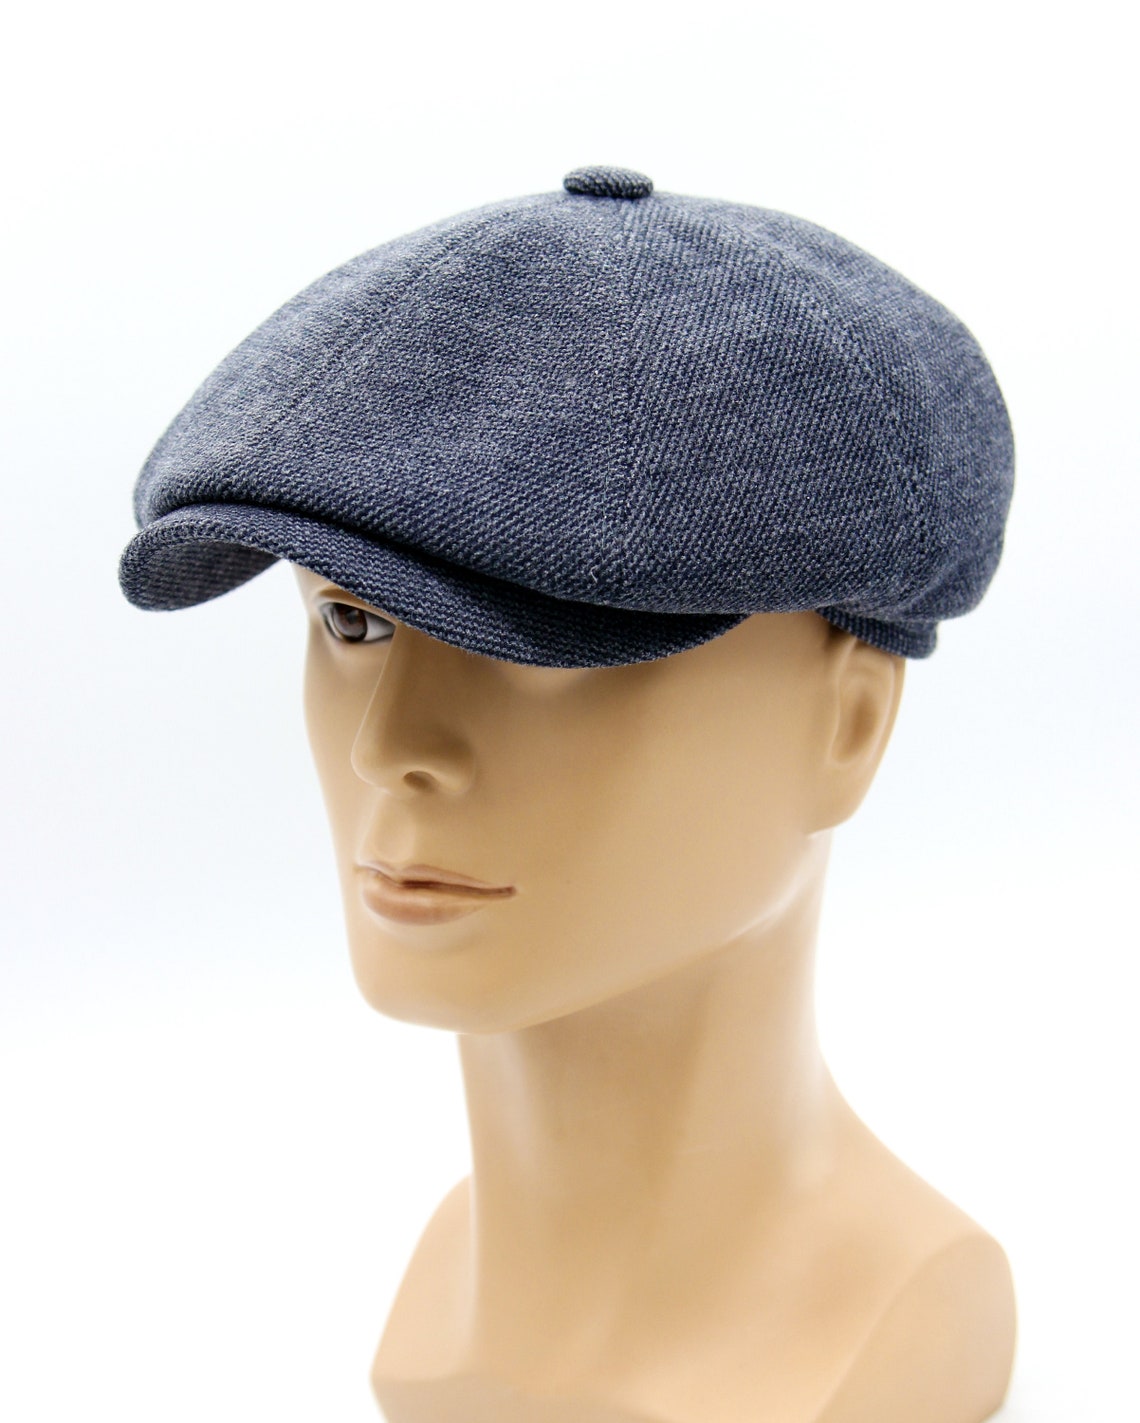 Spring caps for men Hat type Newsboy Cap Newsboy Hat Gatsby | Etsy